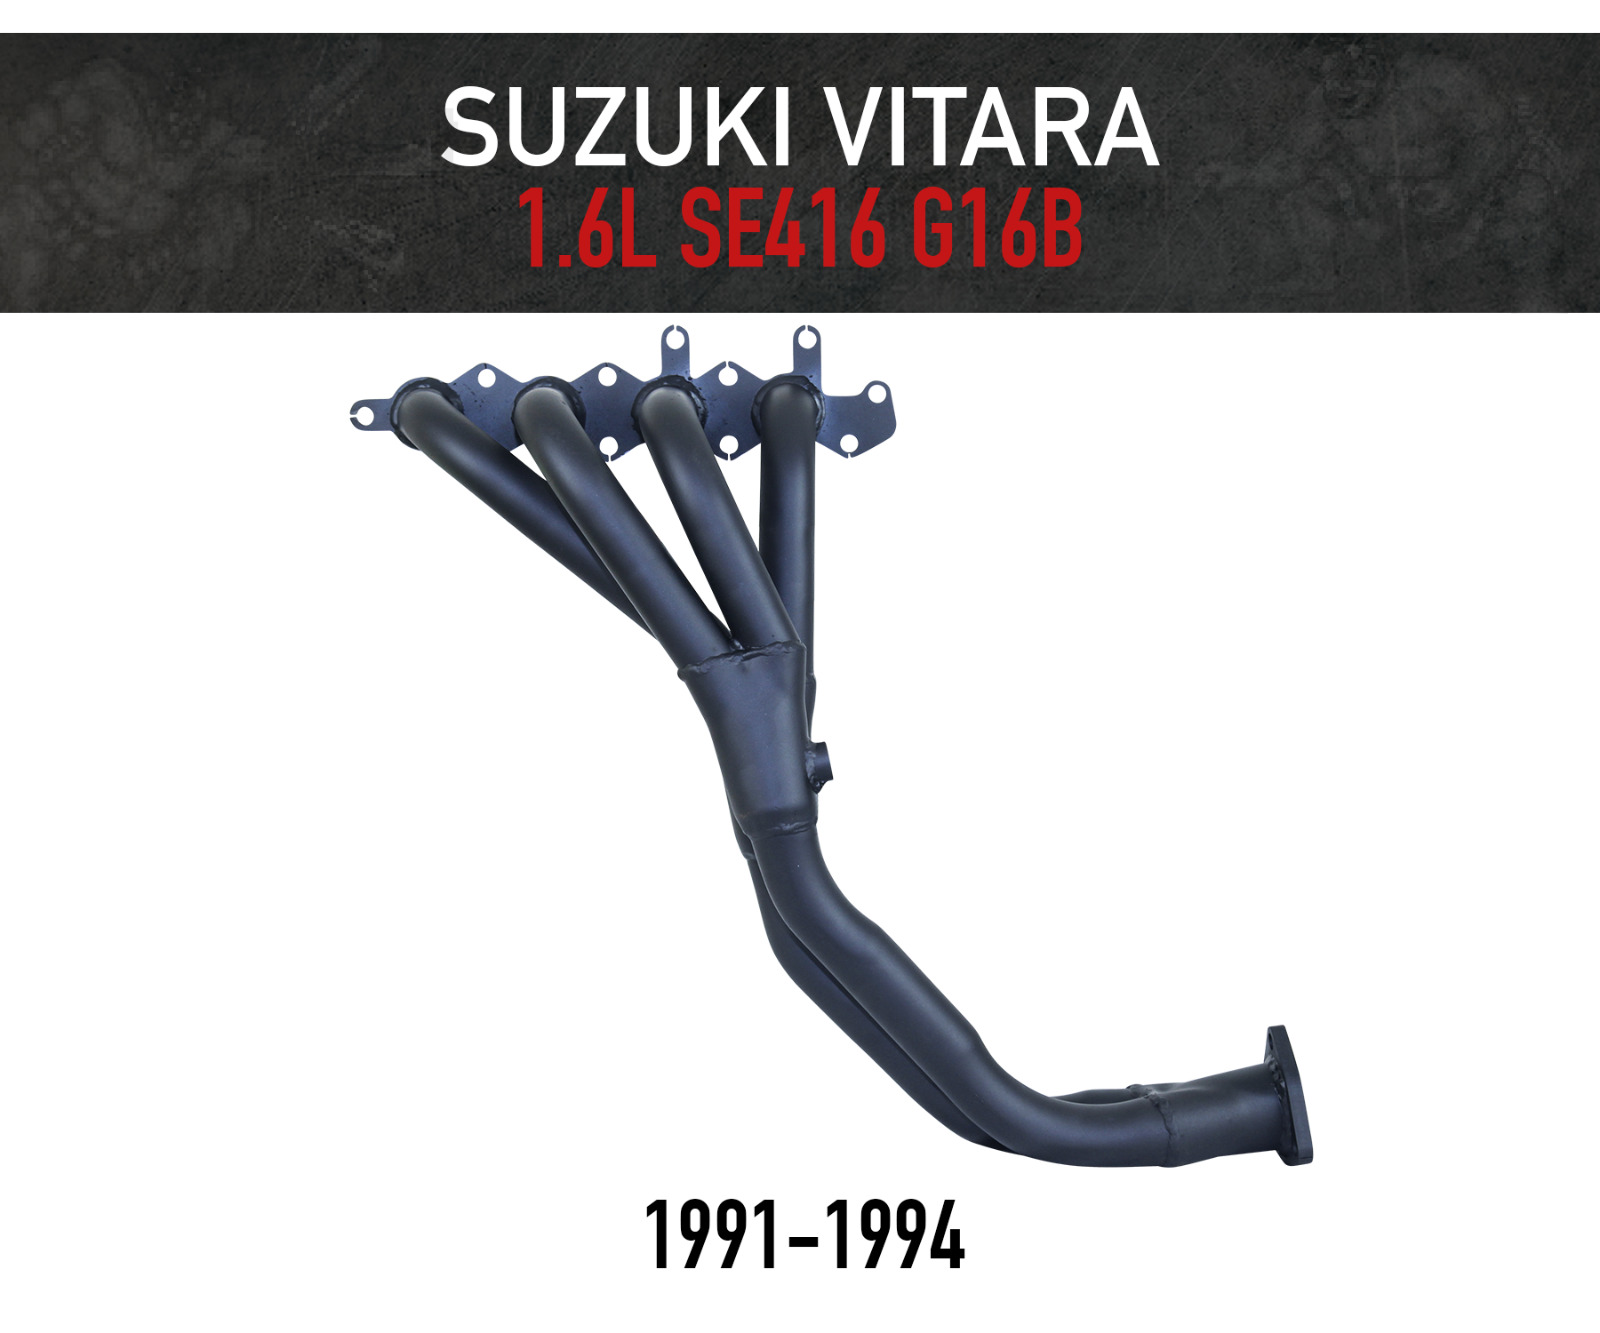 Headers / Extractors for Suzuki Vitara 4WD 1.6L SE416 G16B EFI (1991-1994)